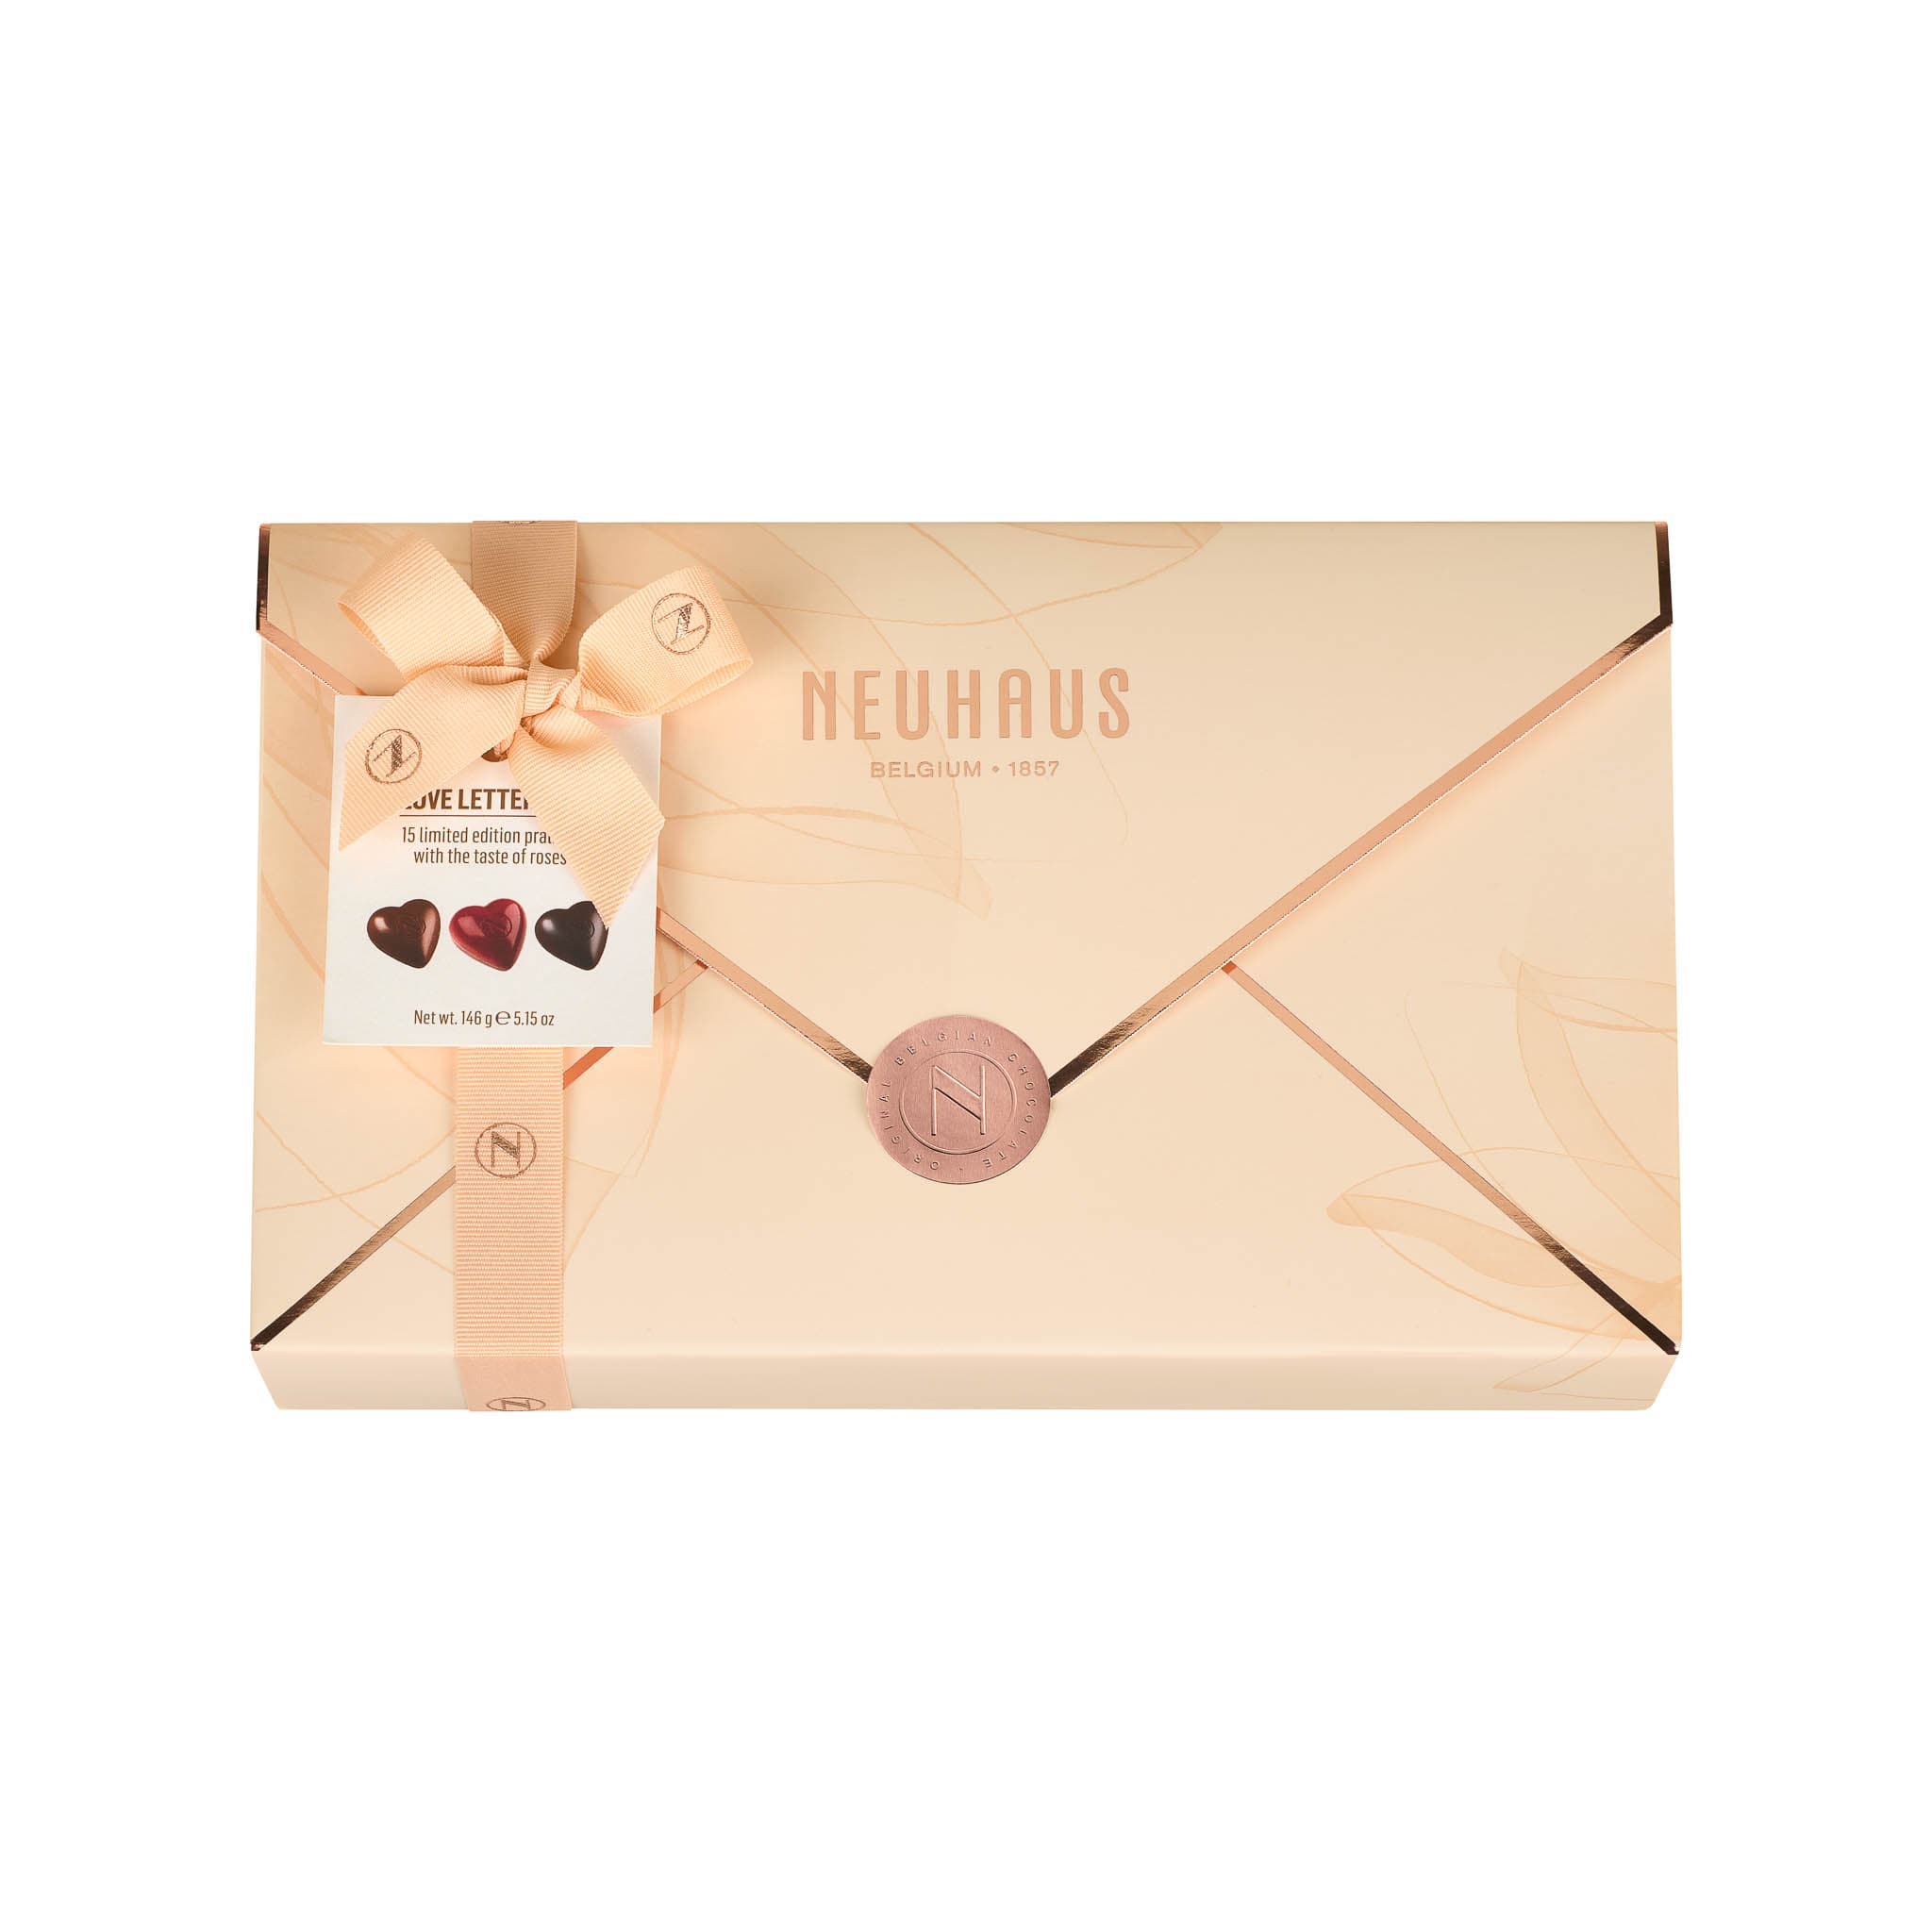 Neuhaus Love Letter Box of Chocolates, 146g